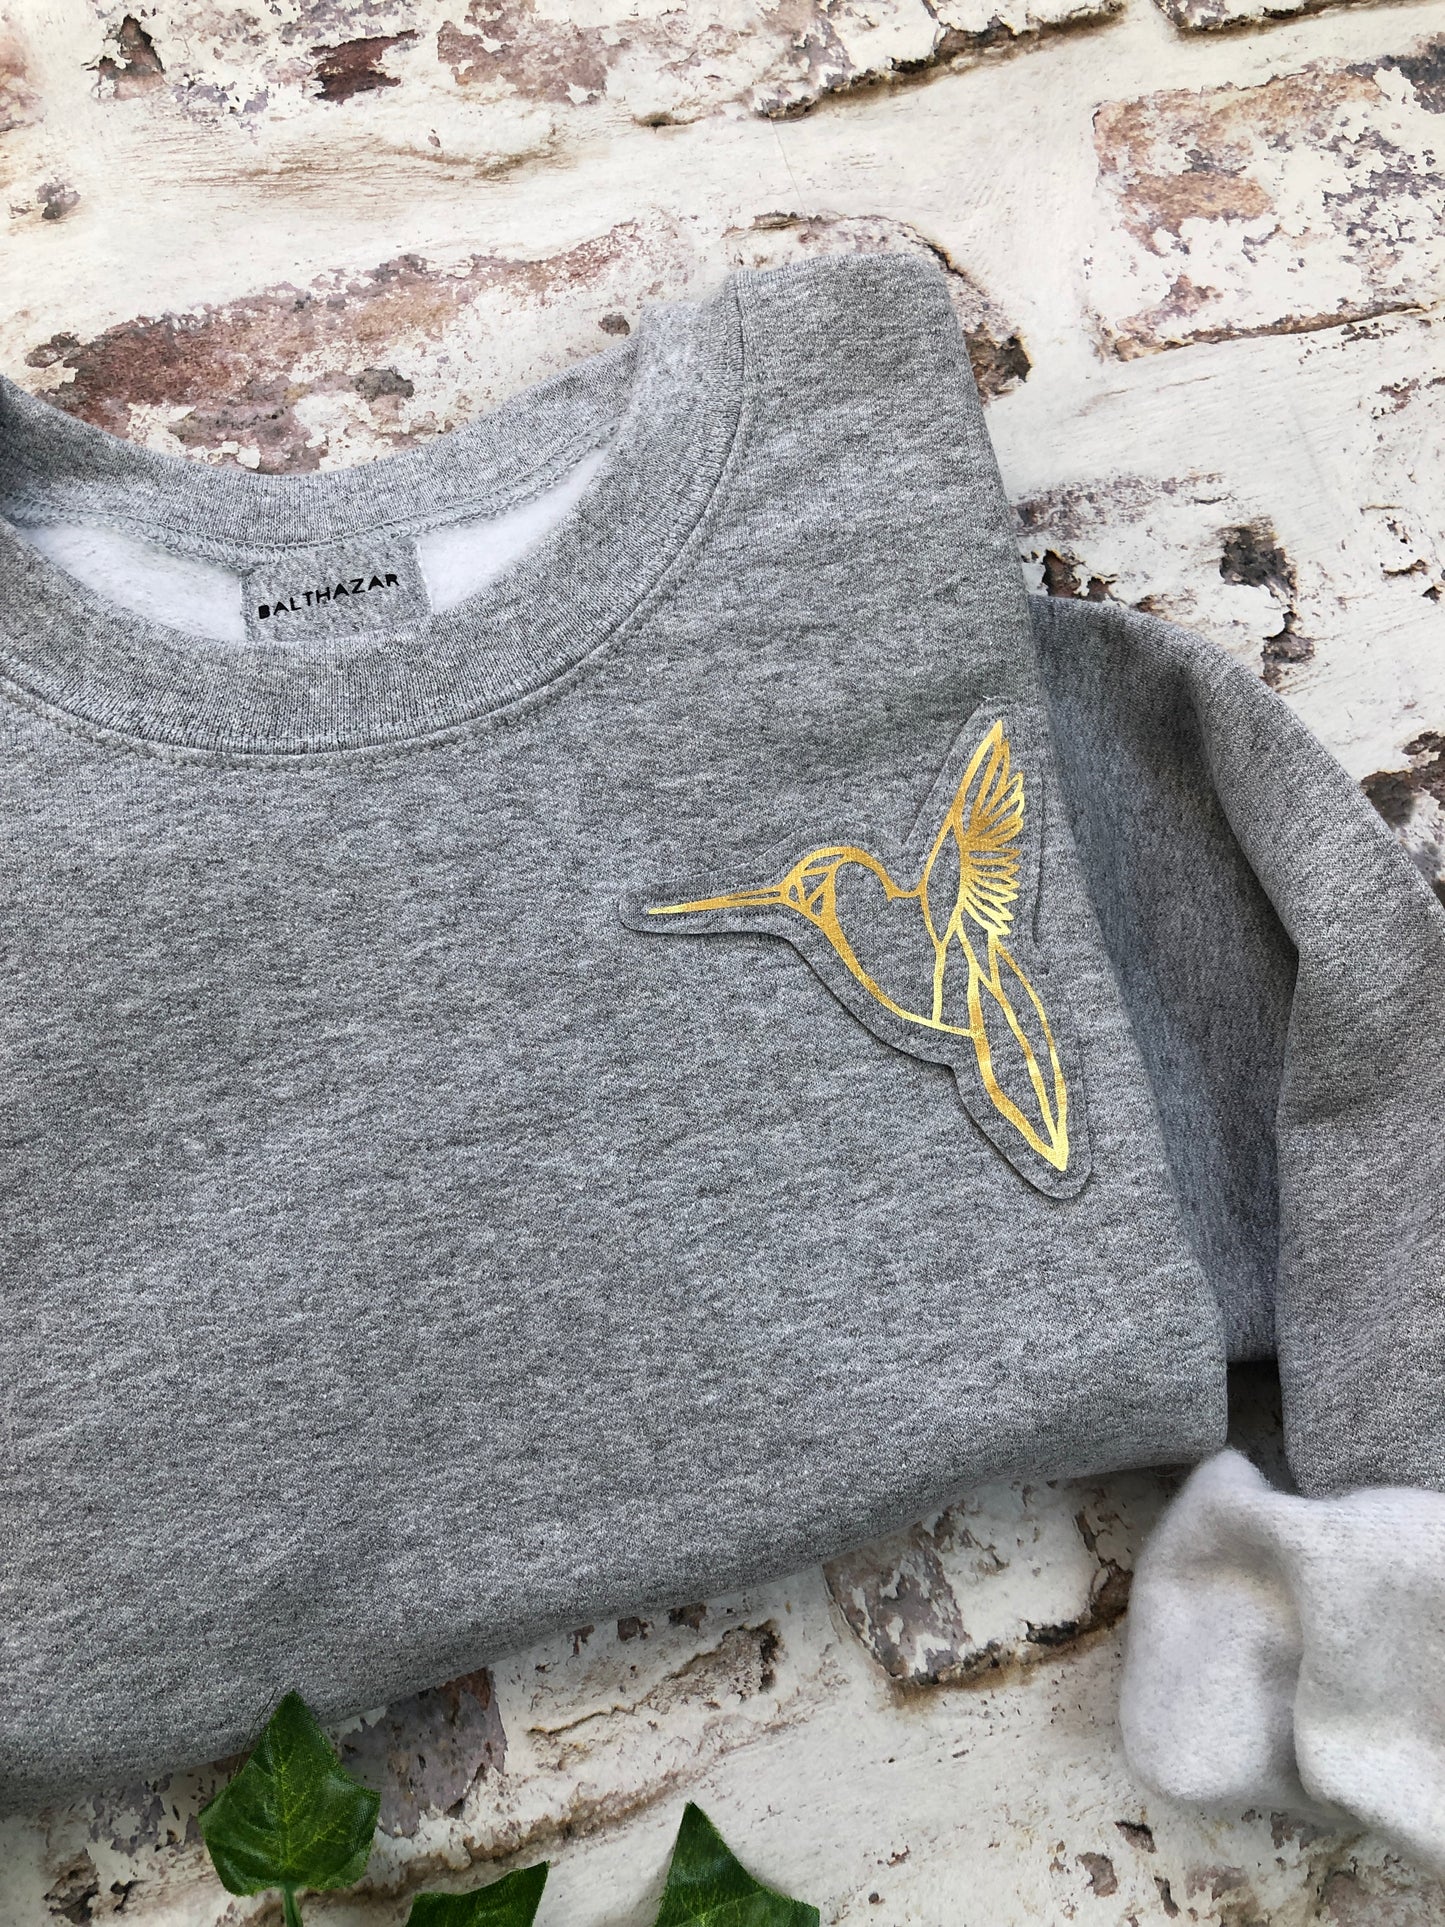 Origami Hummingbird sweatshirt - textured metallic